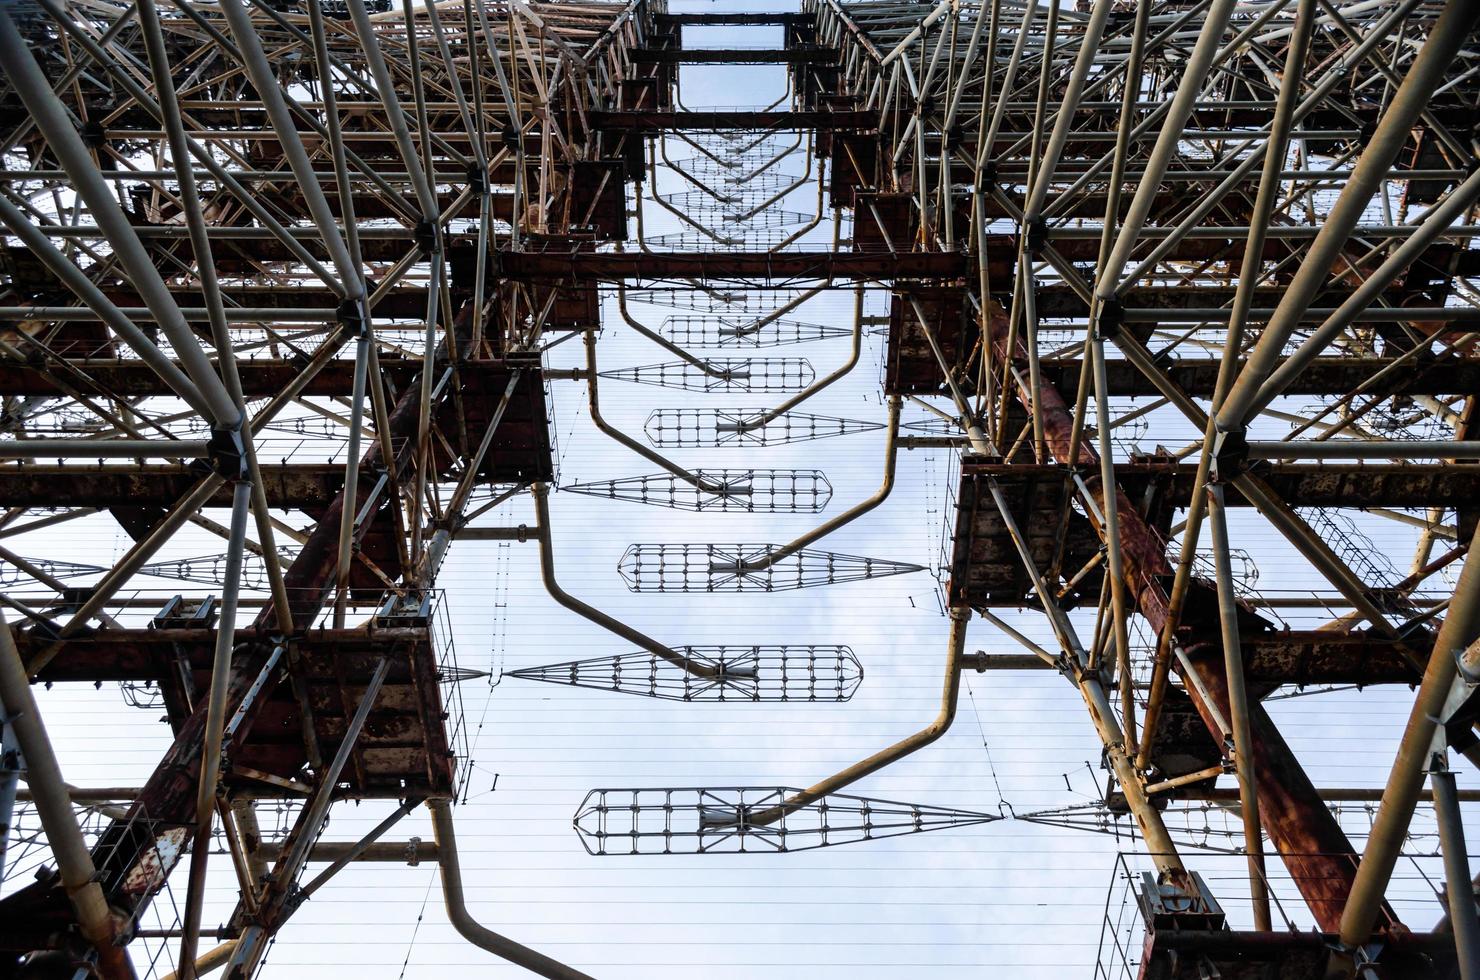 pripyat, Ukraina, 2021 - gammalt radiotorn i Tjernobyl foto